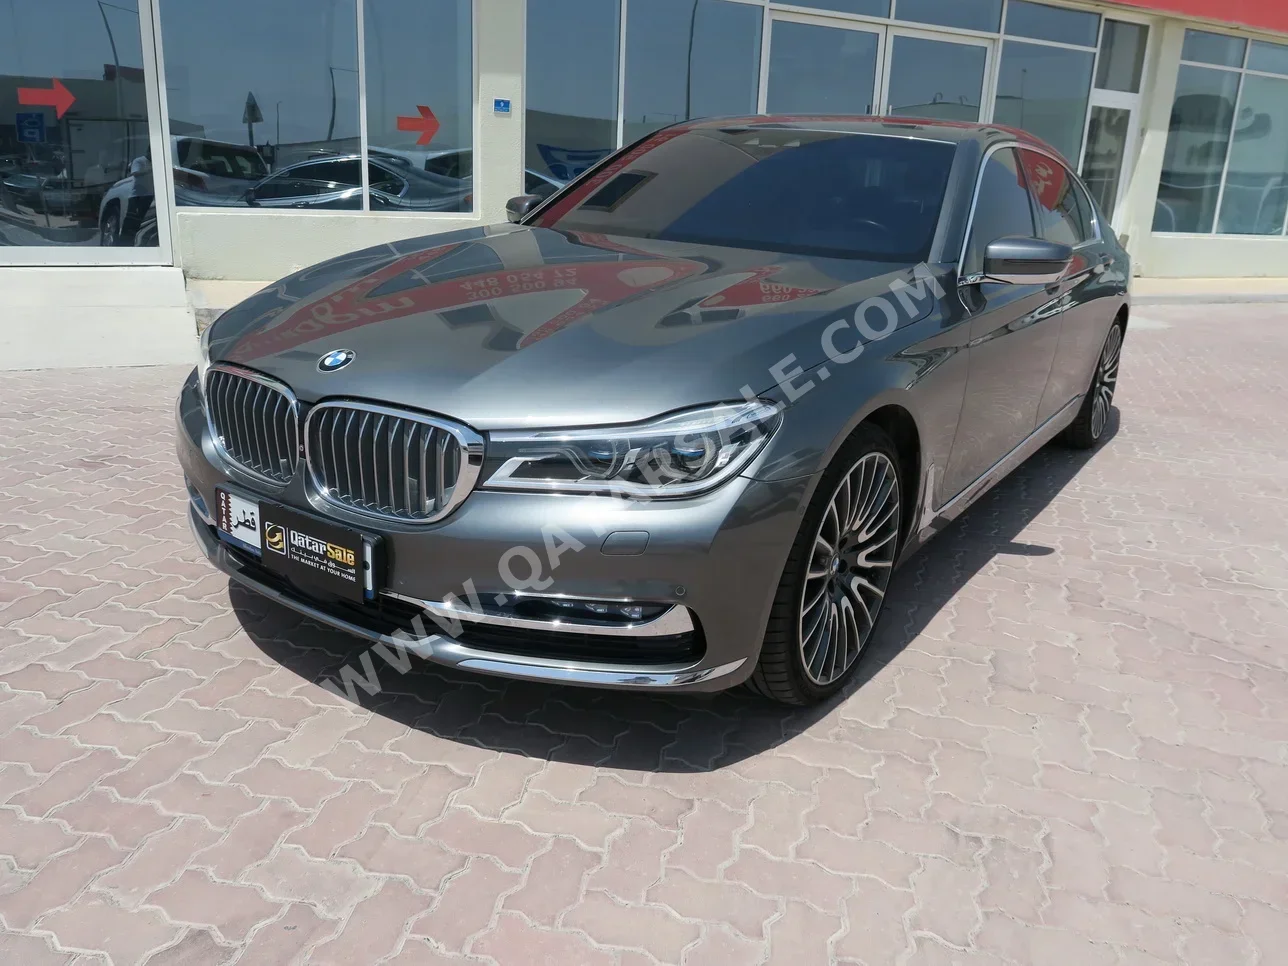 BMW  7-Series  750 Li  2016  Automatic  41,000 Km  8 Cylinder  Rear Wheel Drive (RWD)  Sedan  Gray